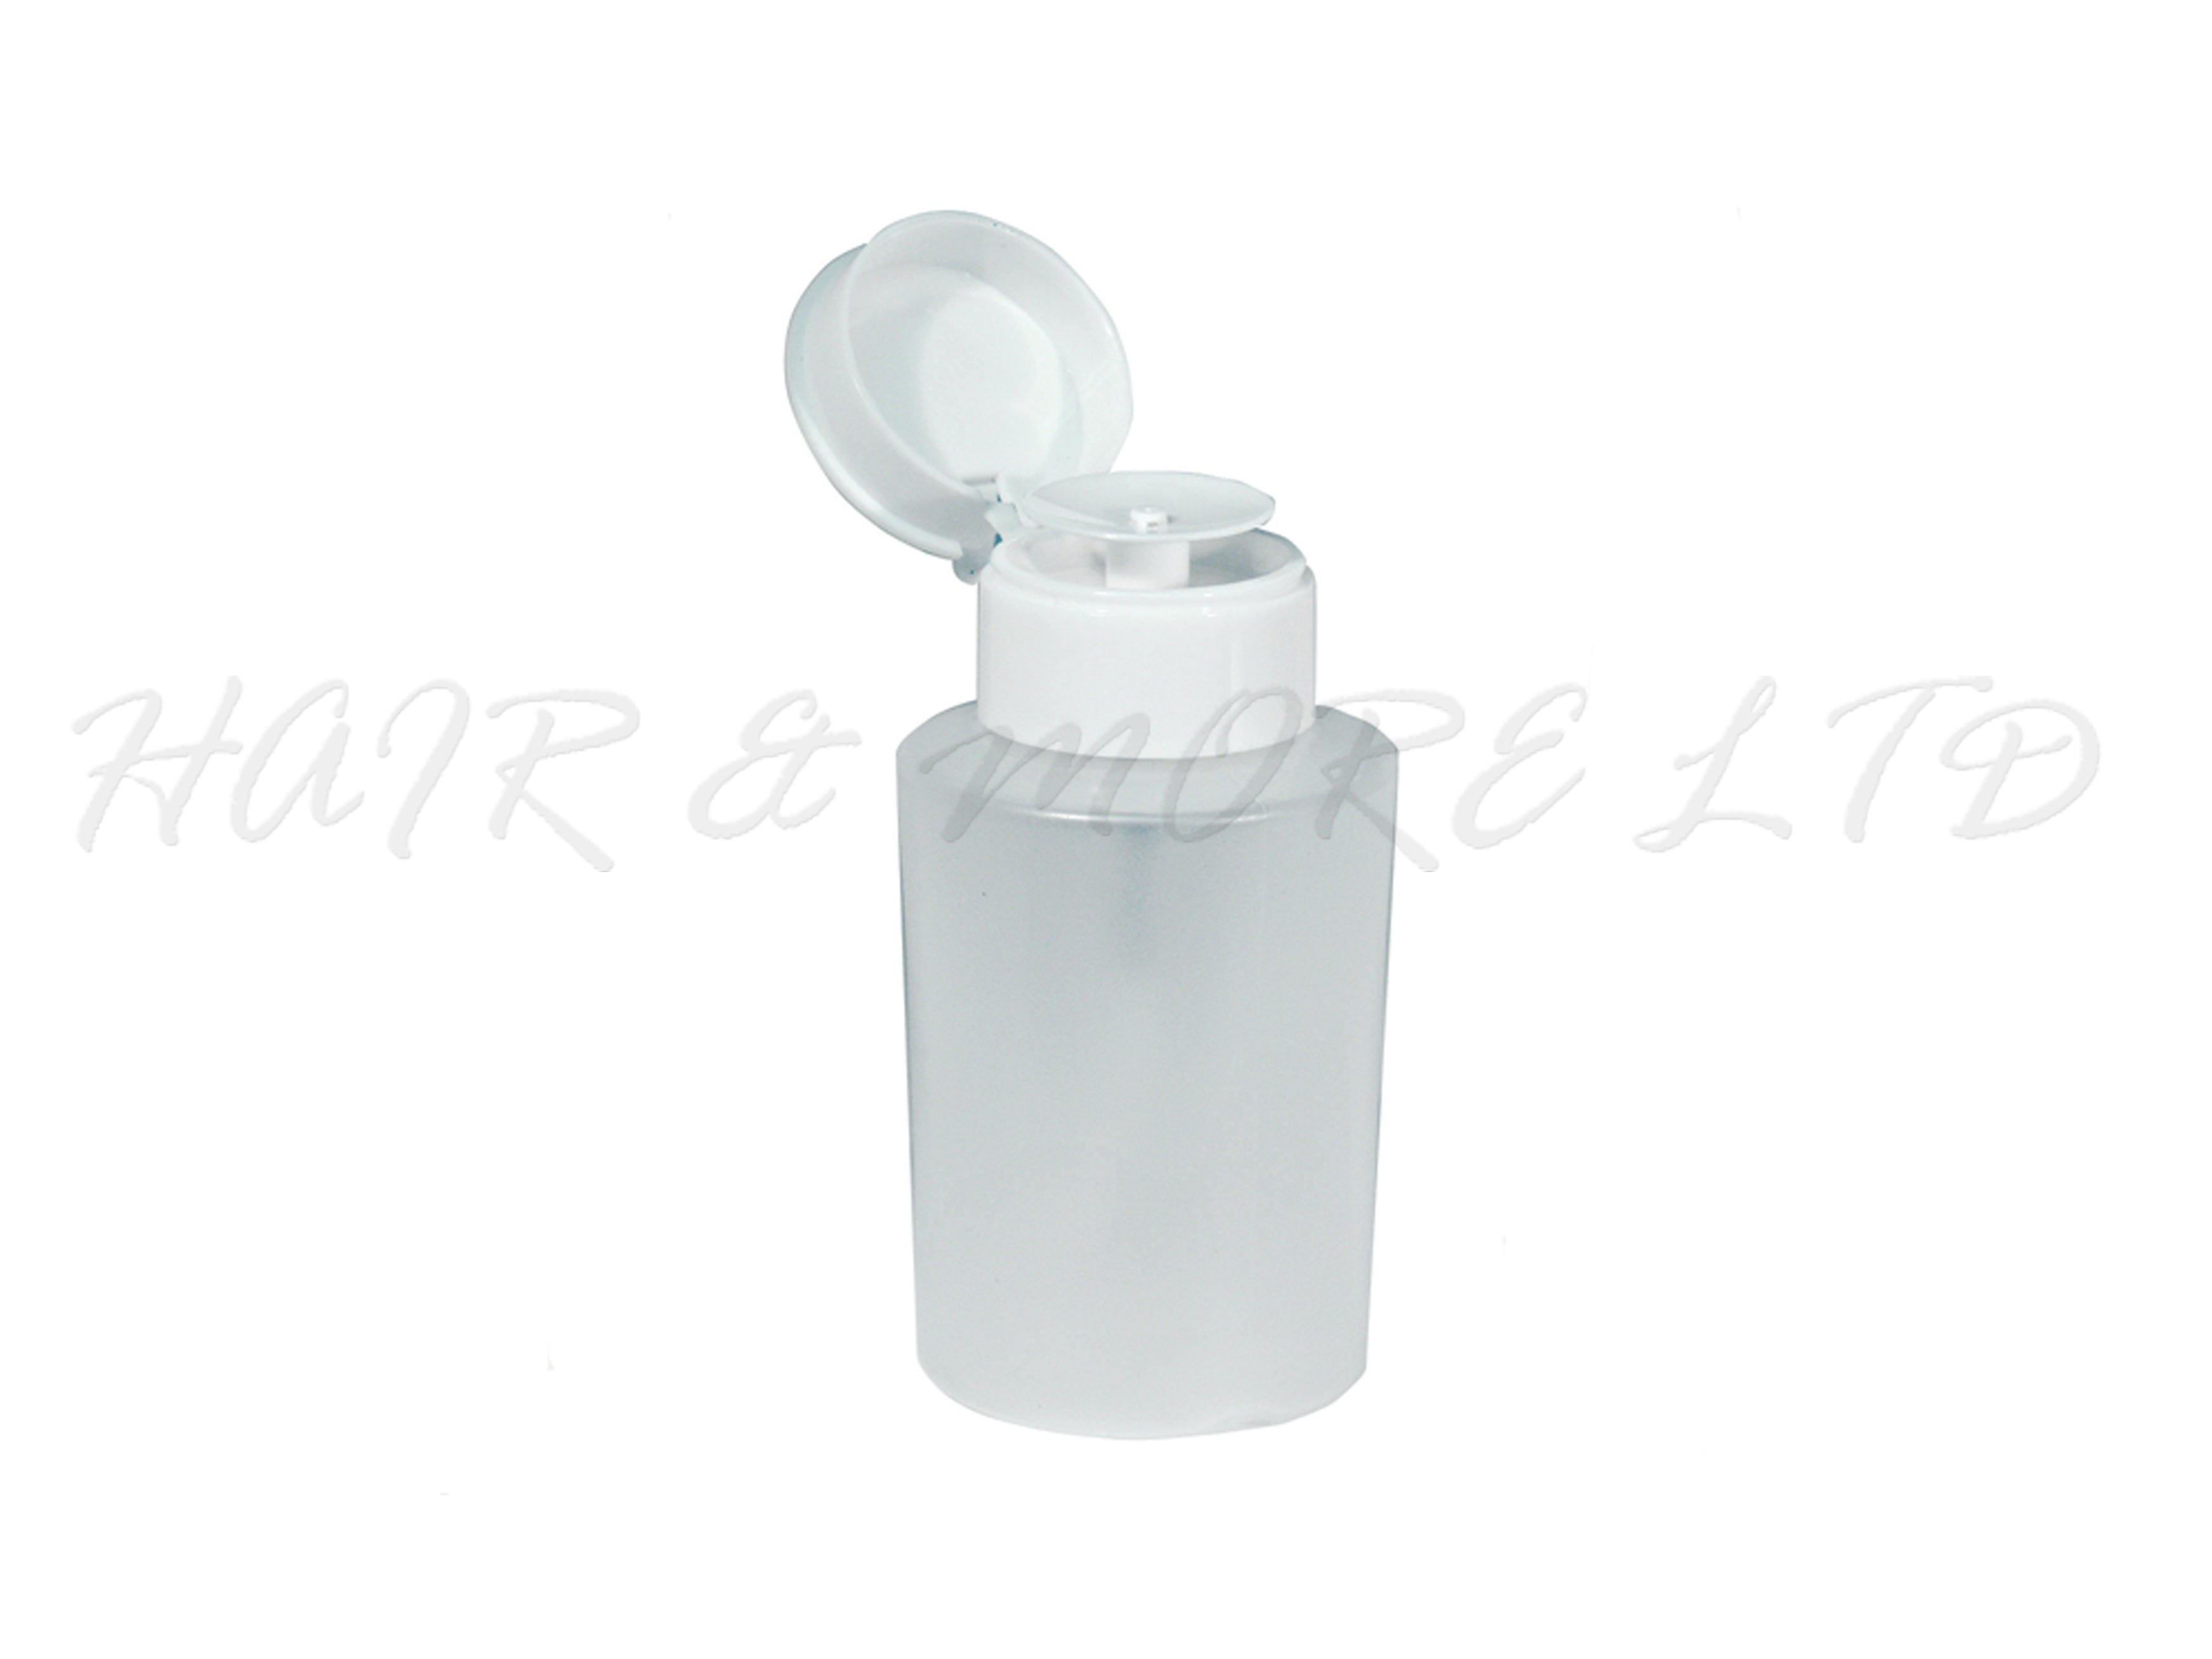 OPI Empty nail polish remover / acetone empty pump dispenser bottle - BLS  Nails